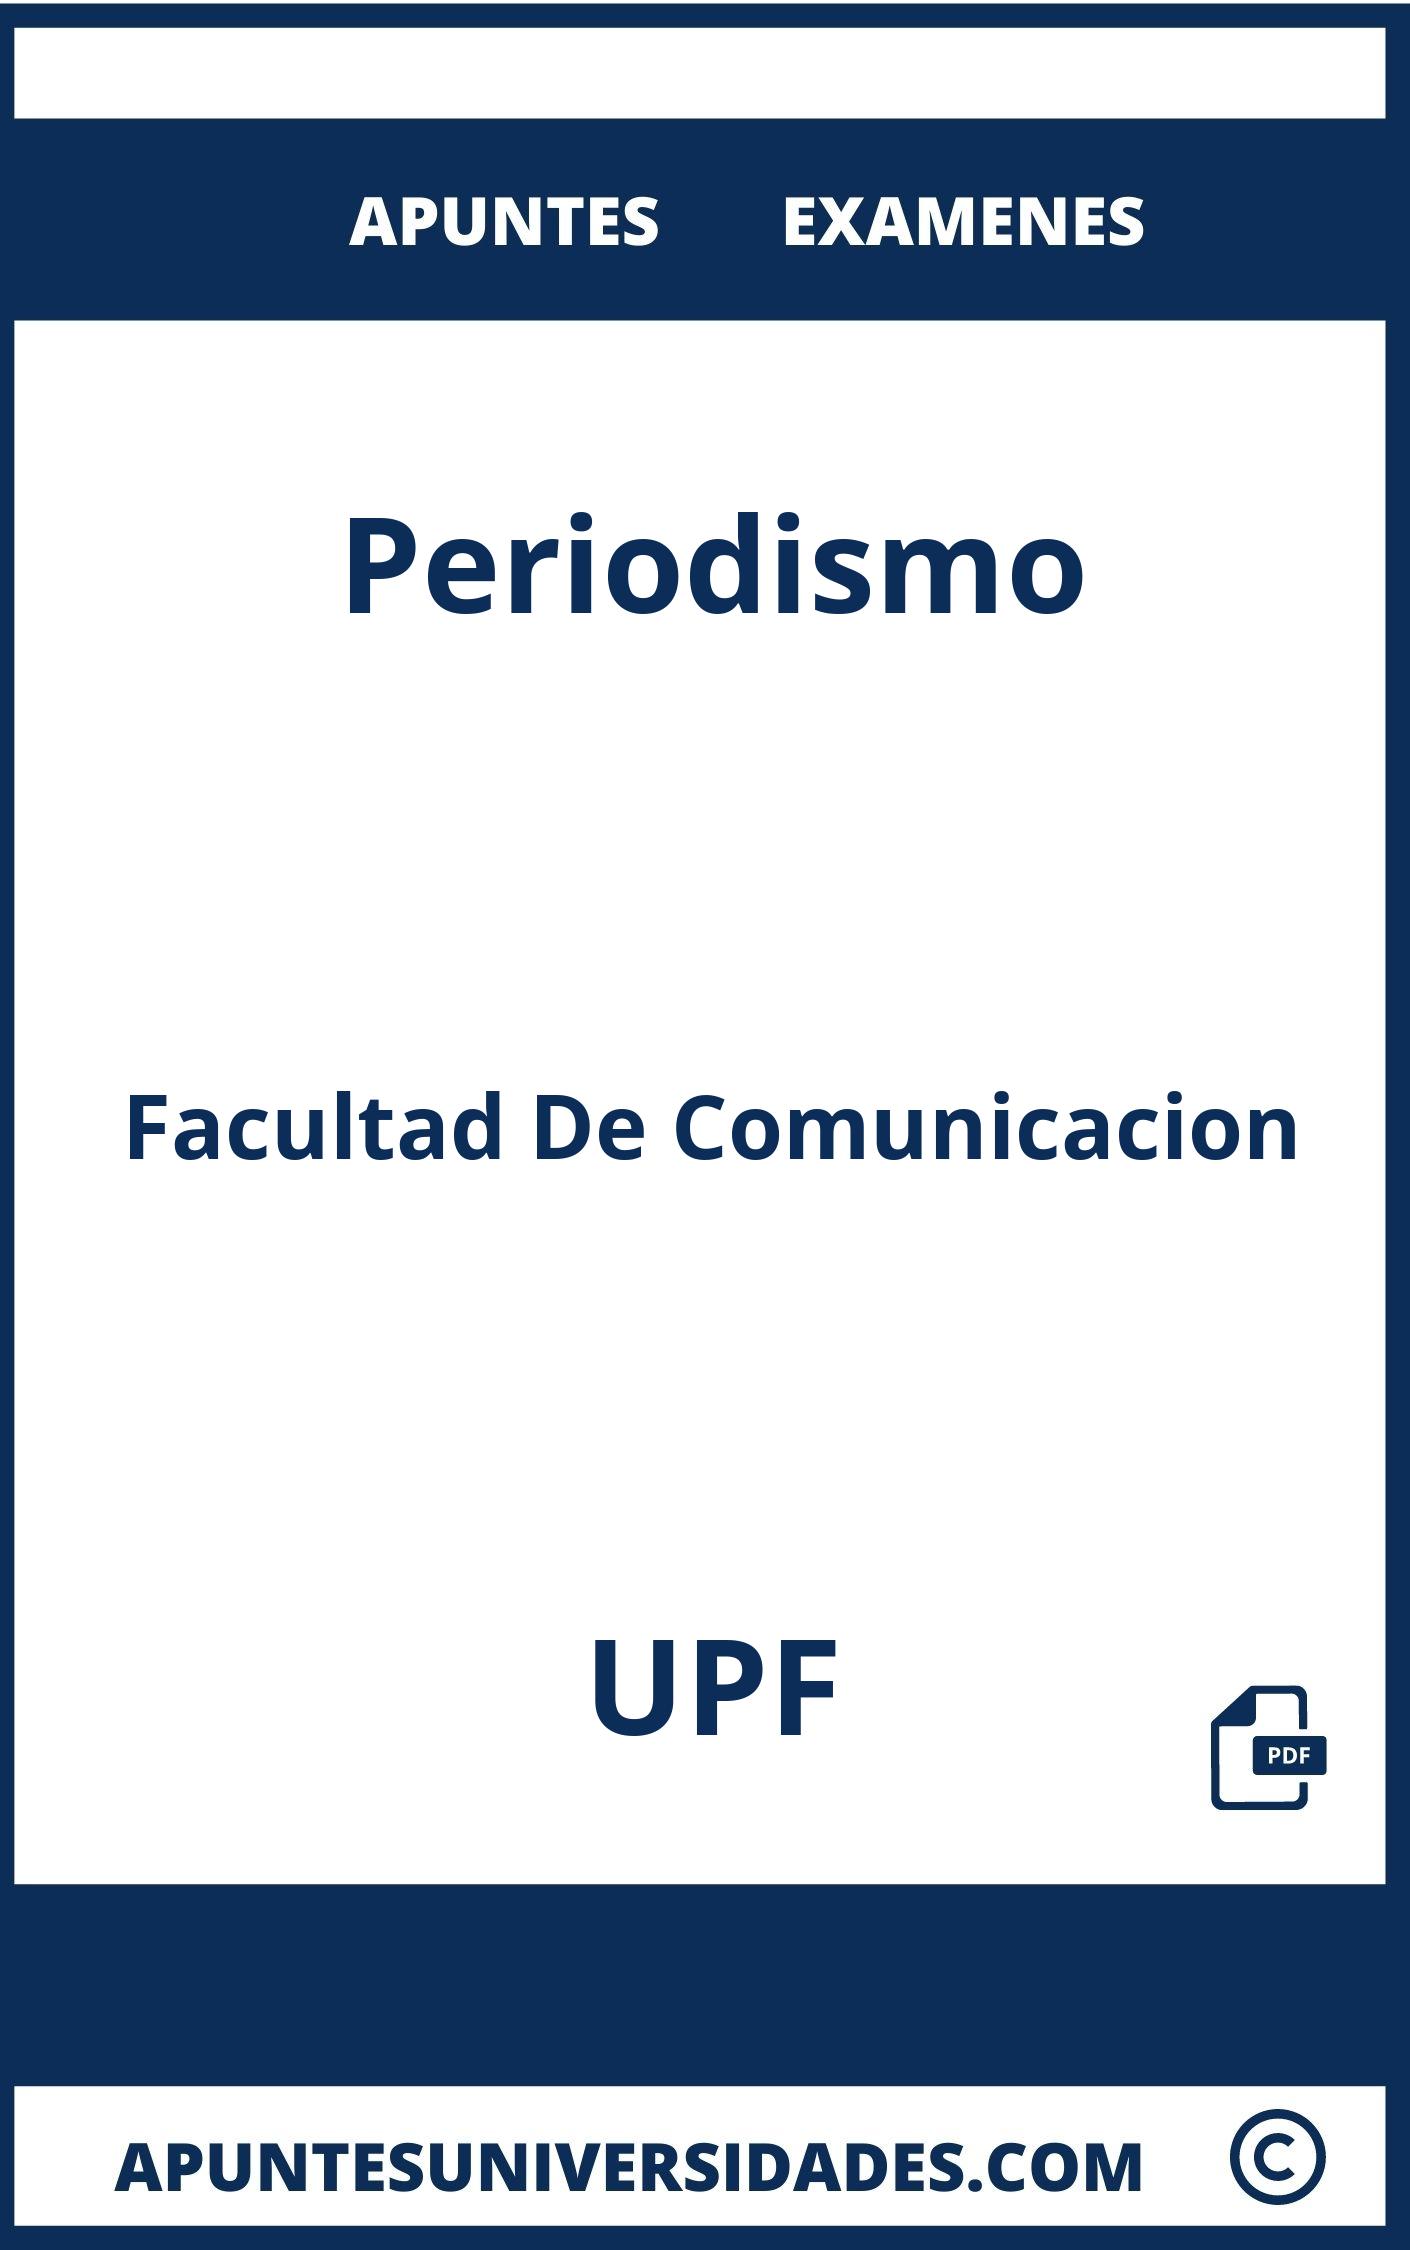 Apuntes y Examenes Periodismo UPF